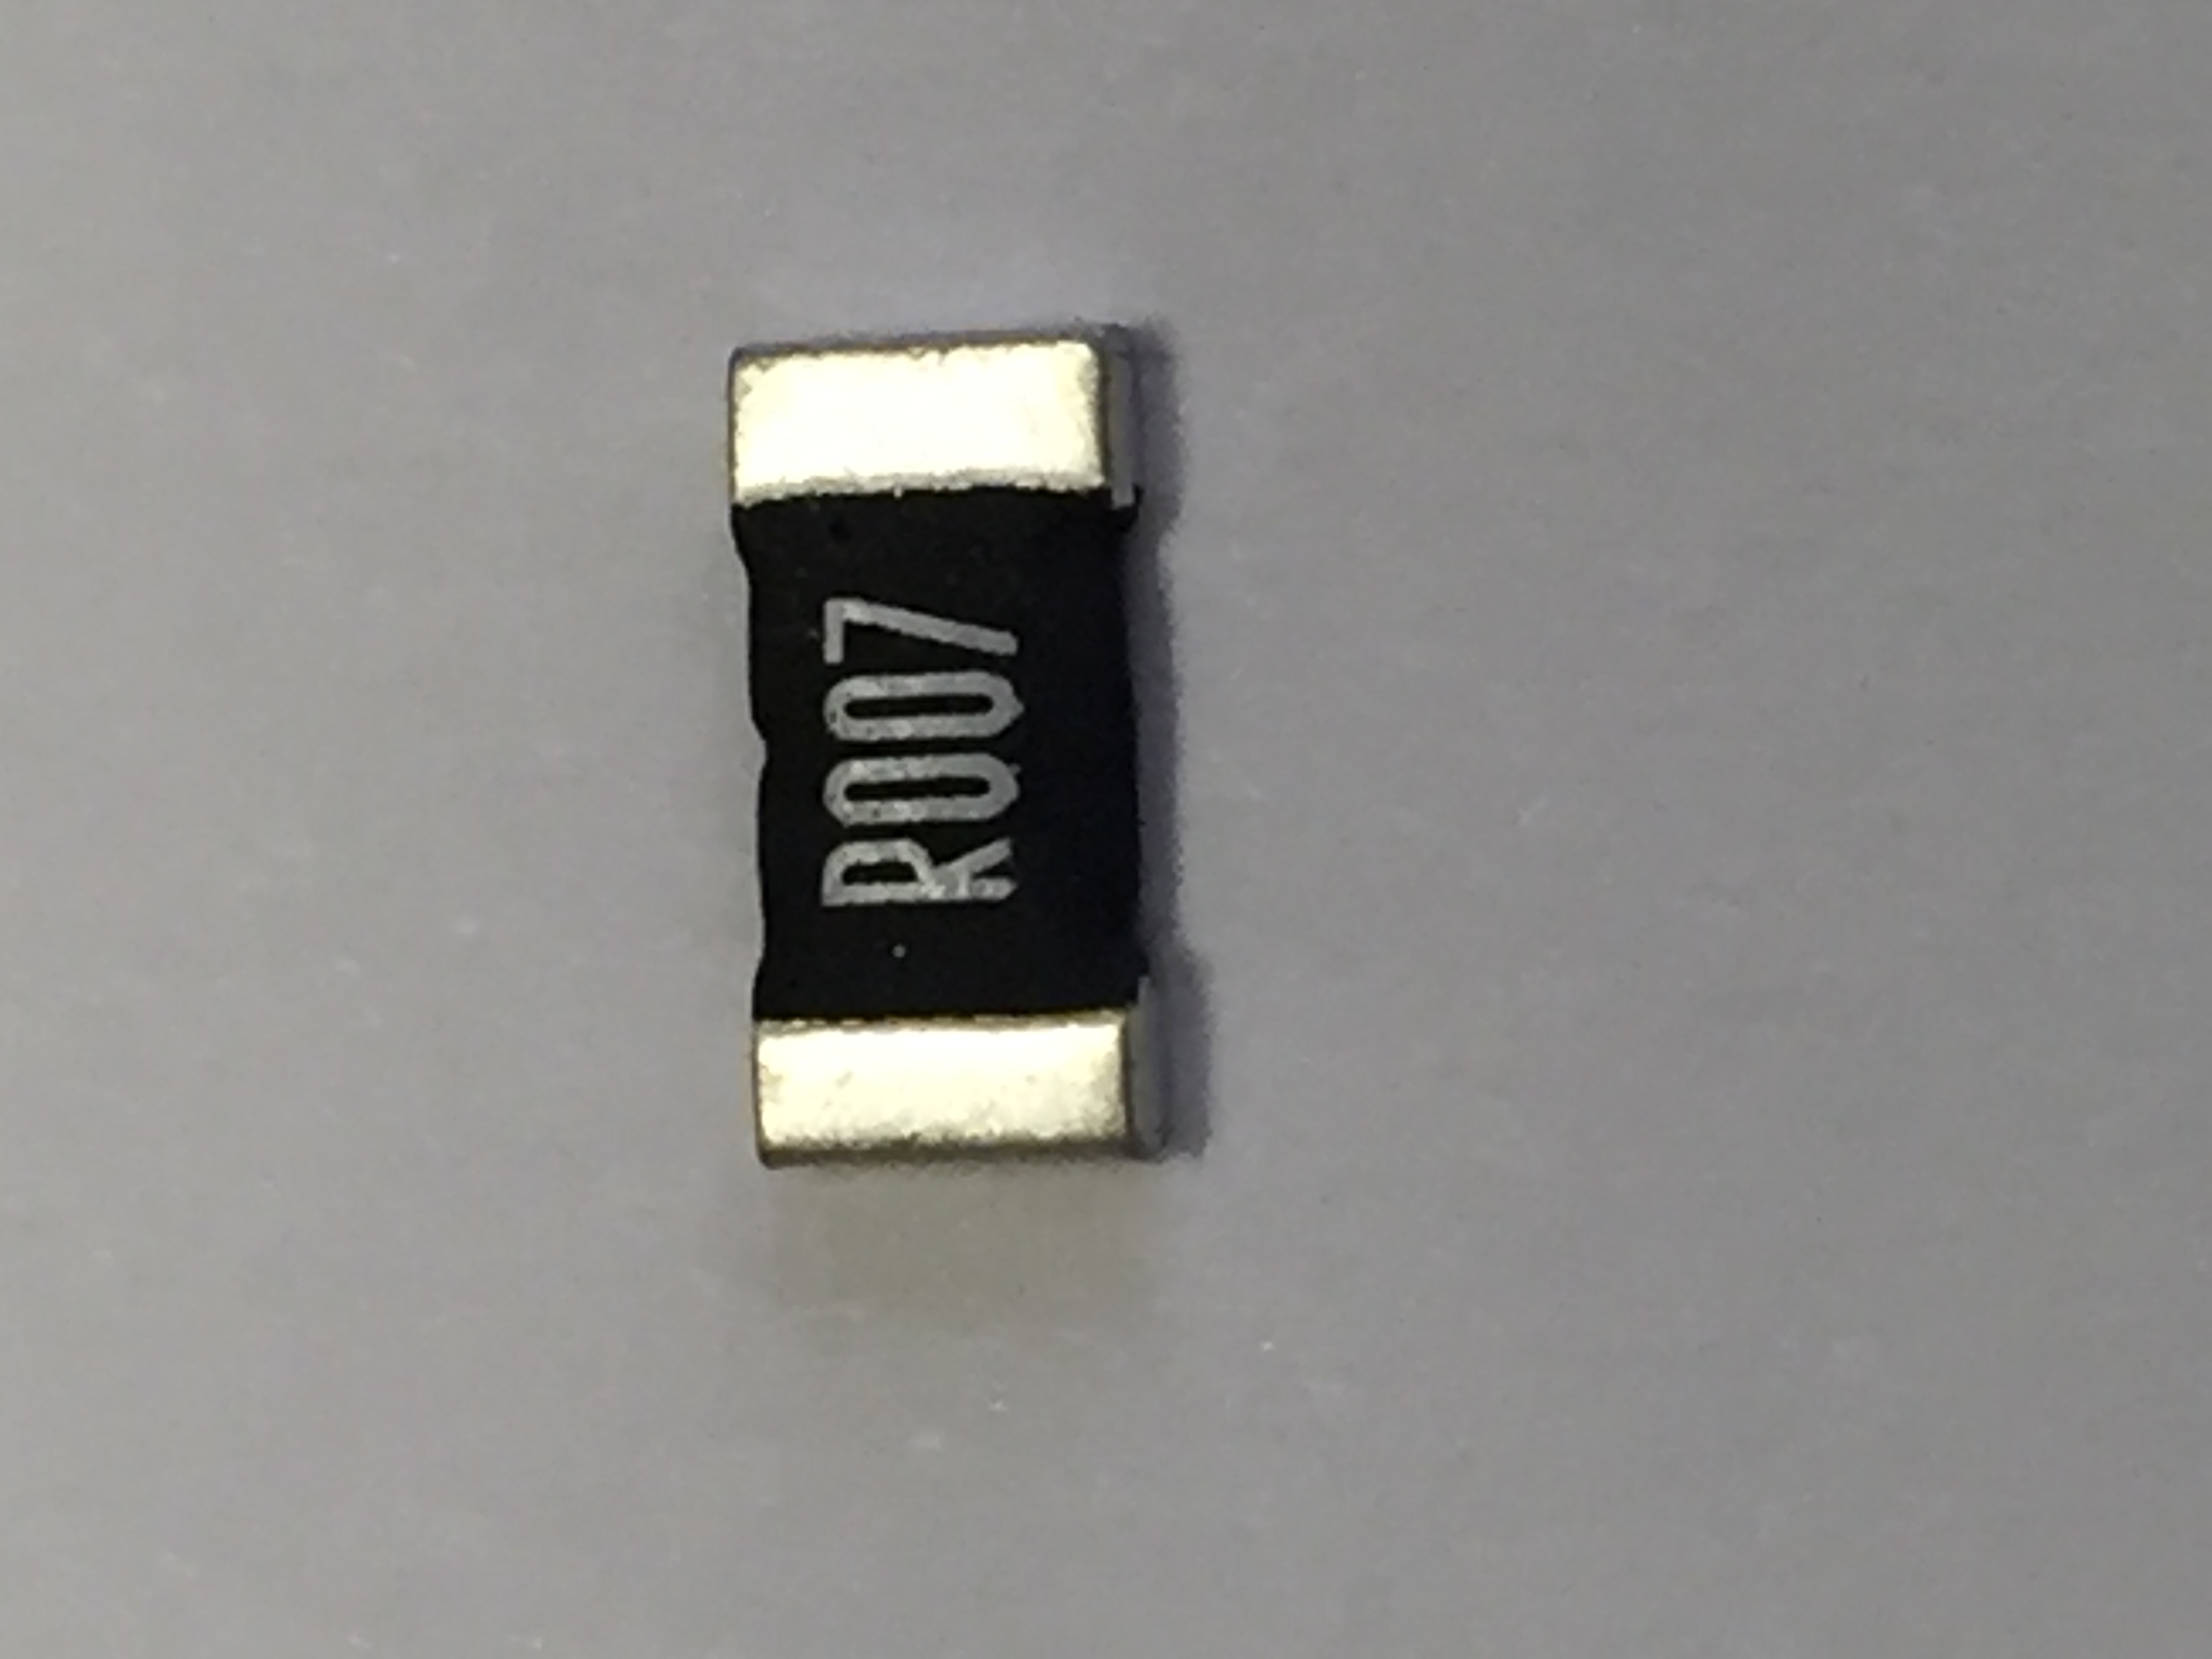 Current Sense Chip Resistors Include a 0.3 Milliohm Value